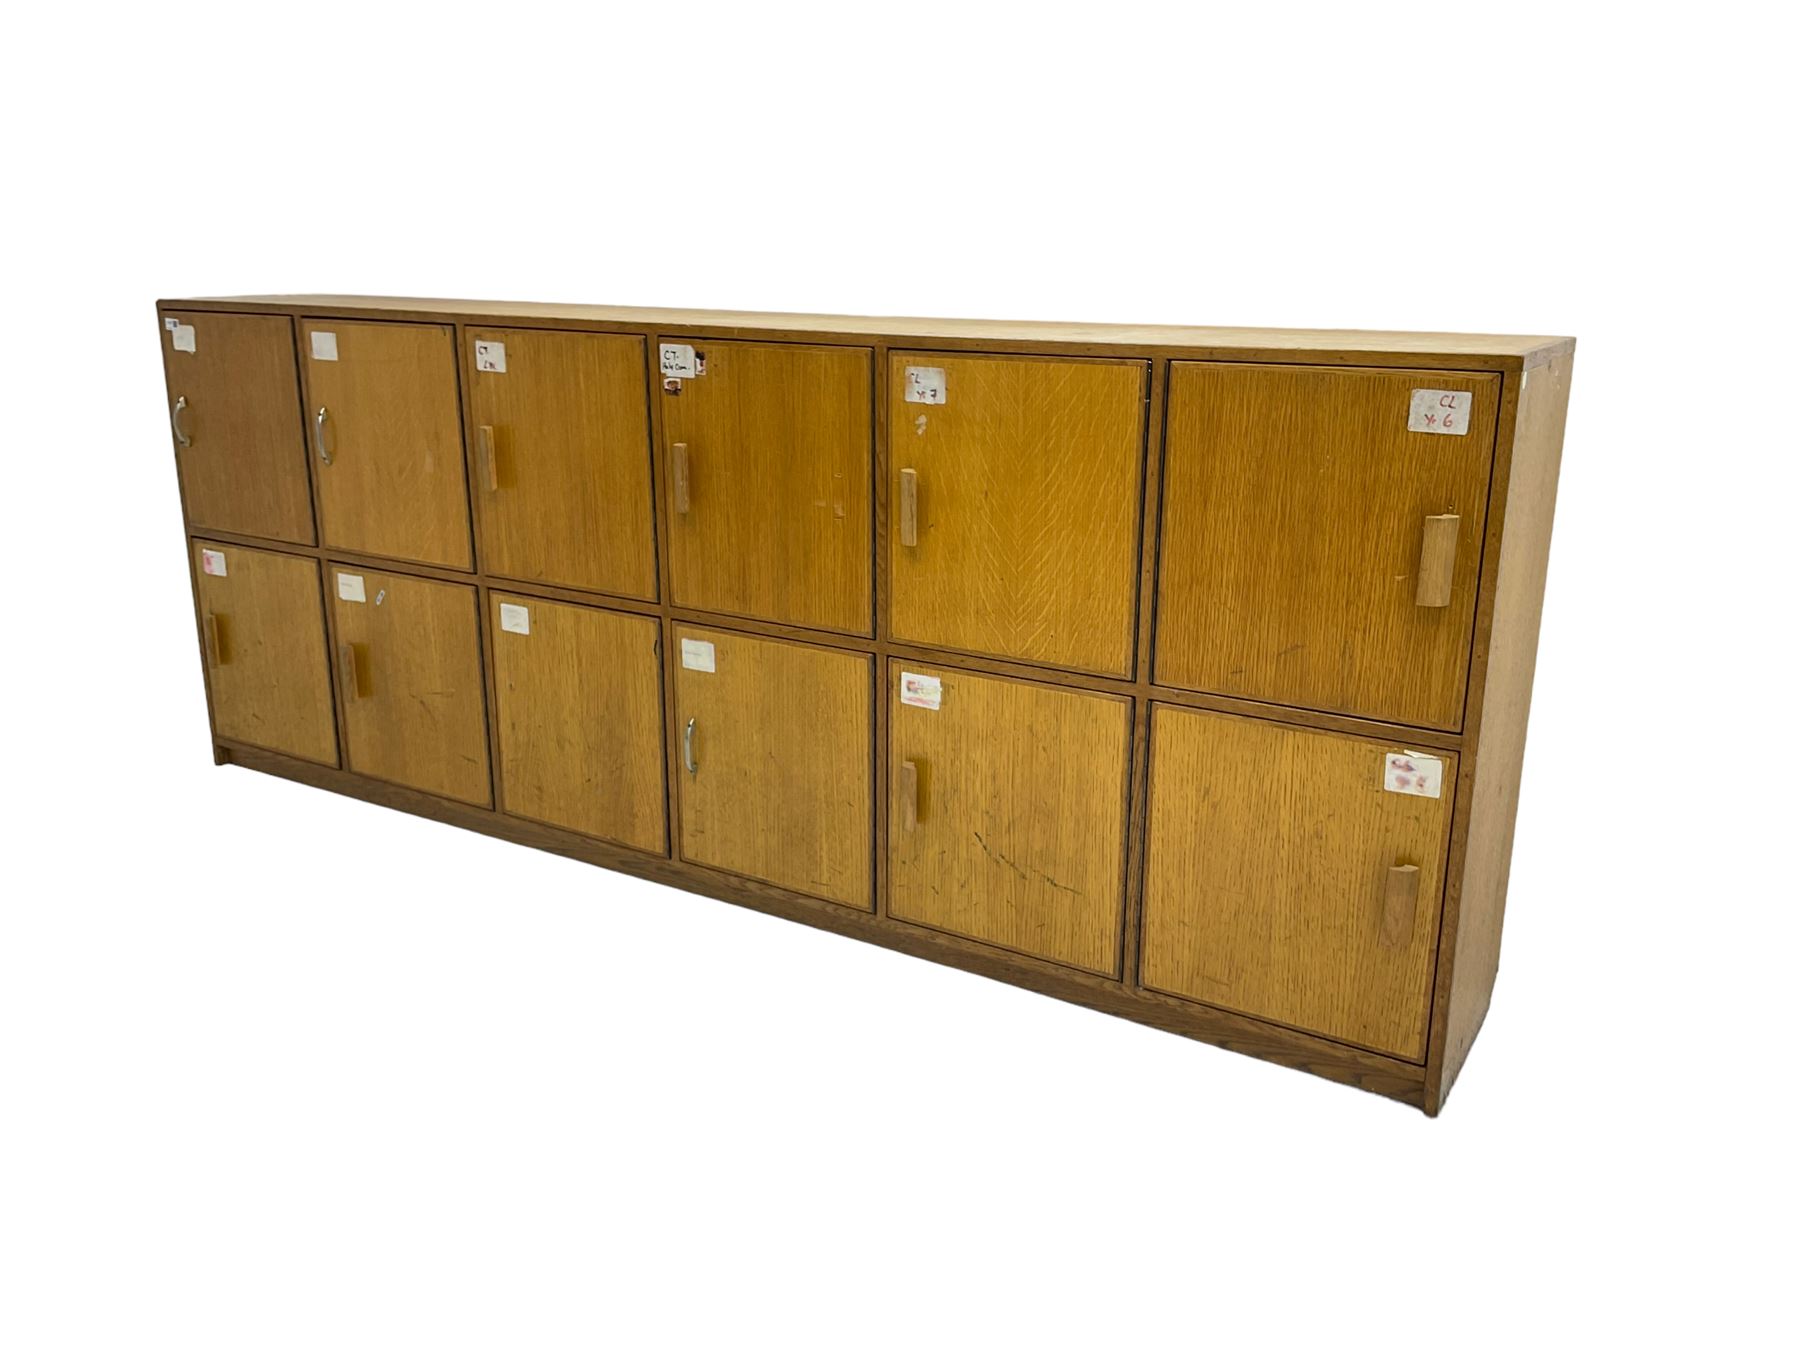 20th century oak bank of lockers - Image 3 of 6